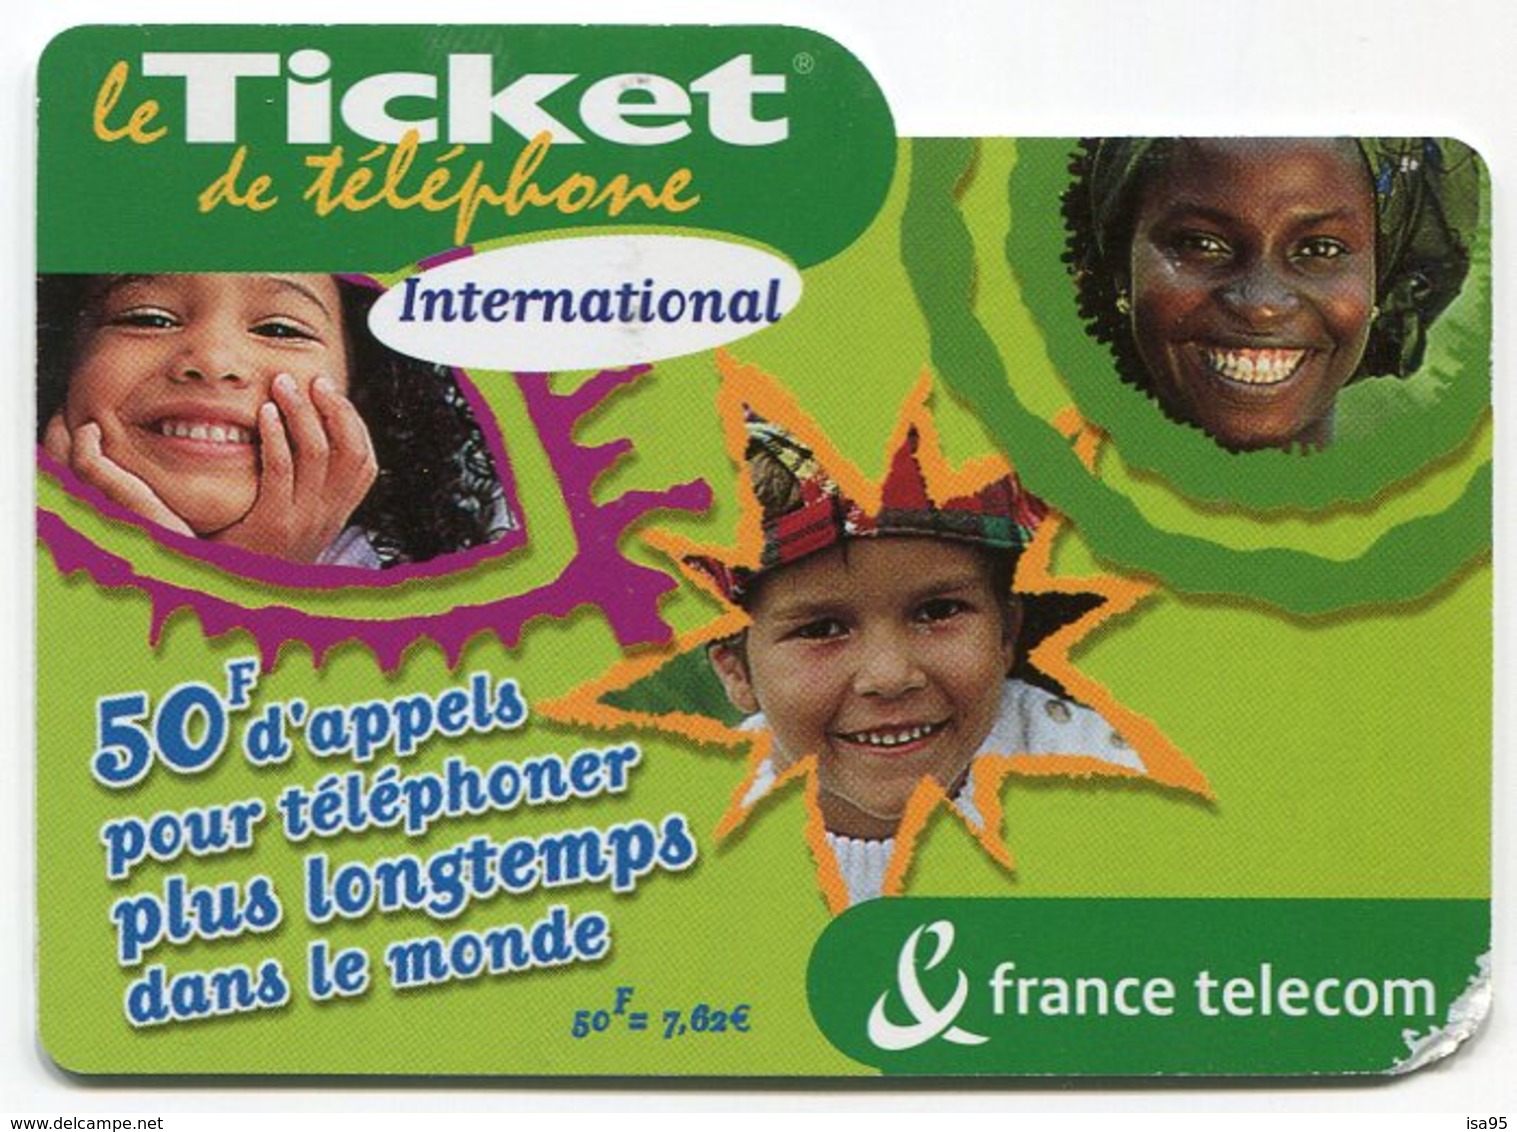 TELECARTE-LE TICKET DE TELEPHONE INTERNATIONAL-2003-50F - Biglietti FT